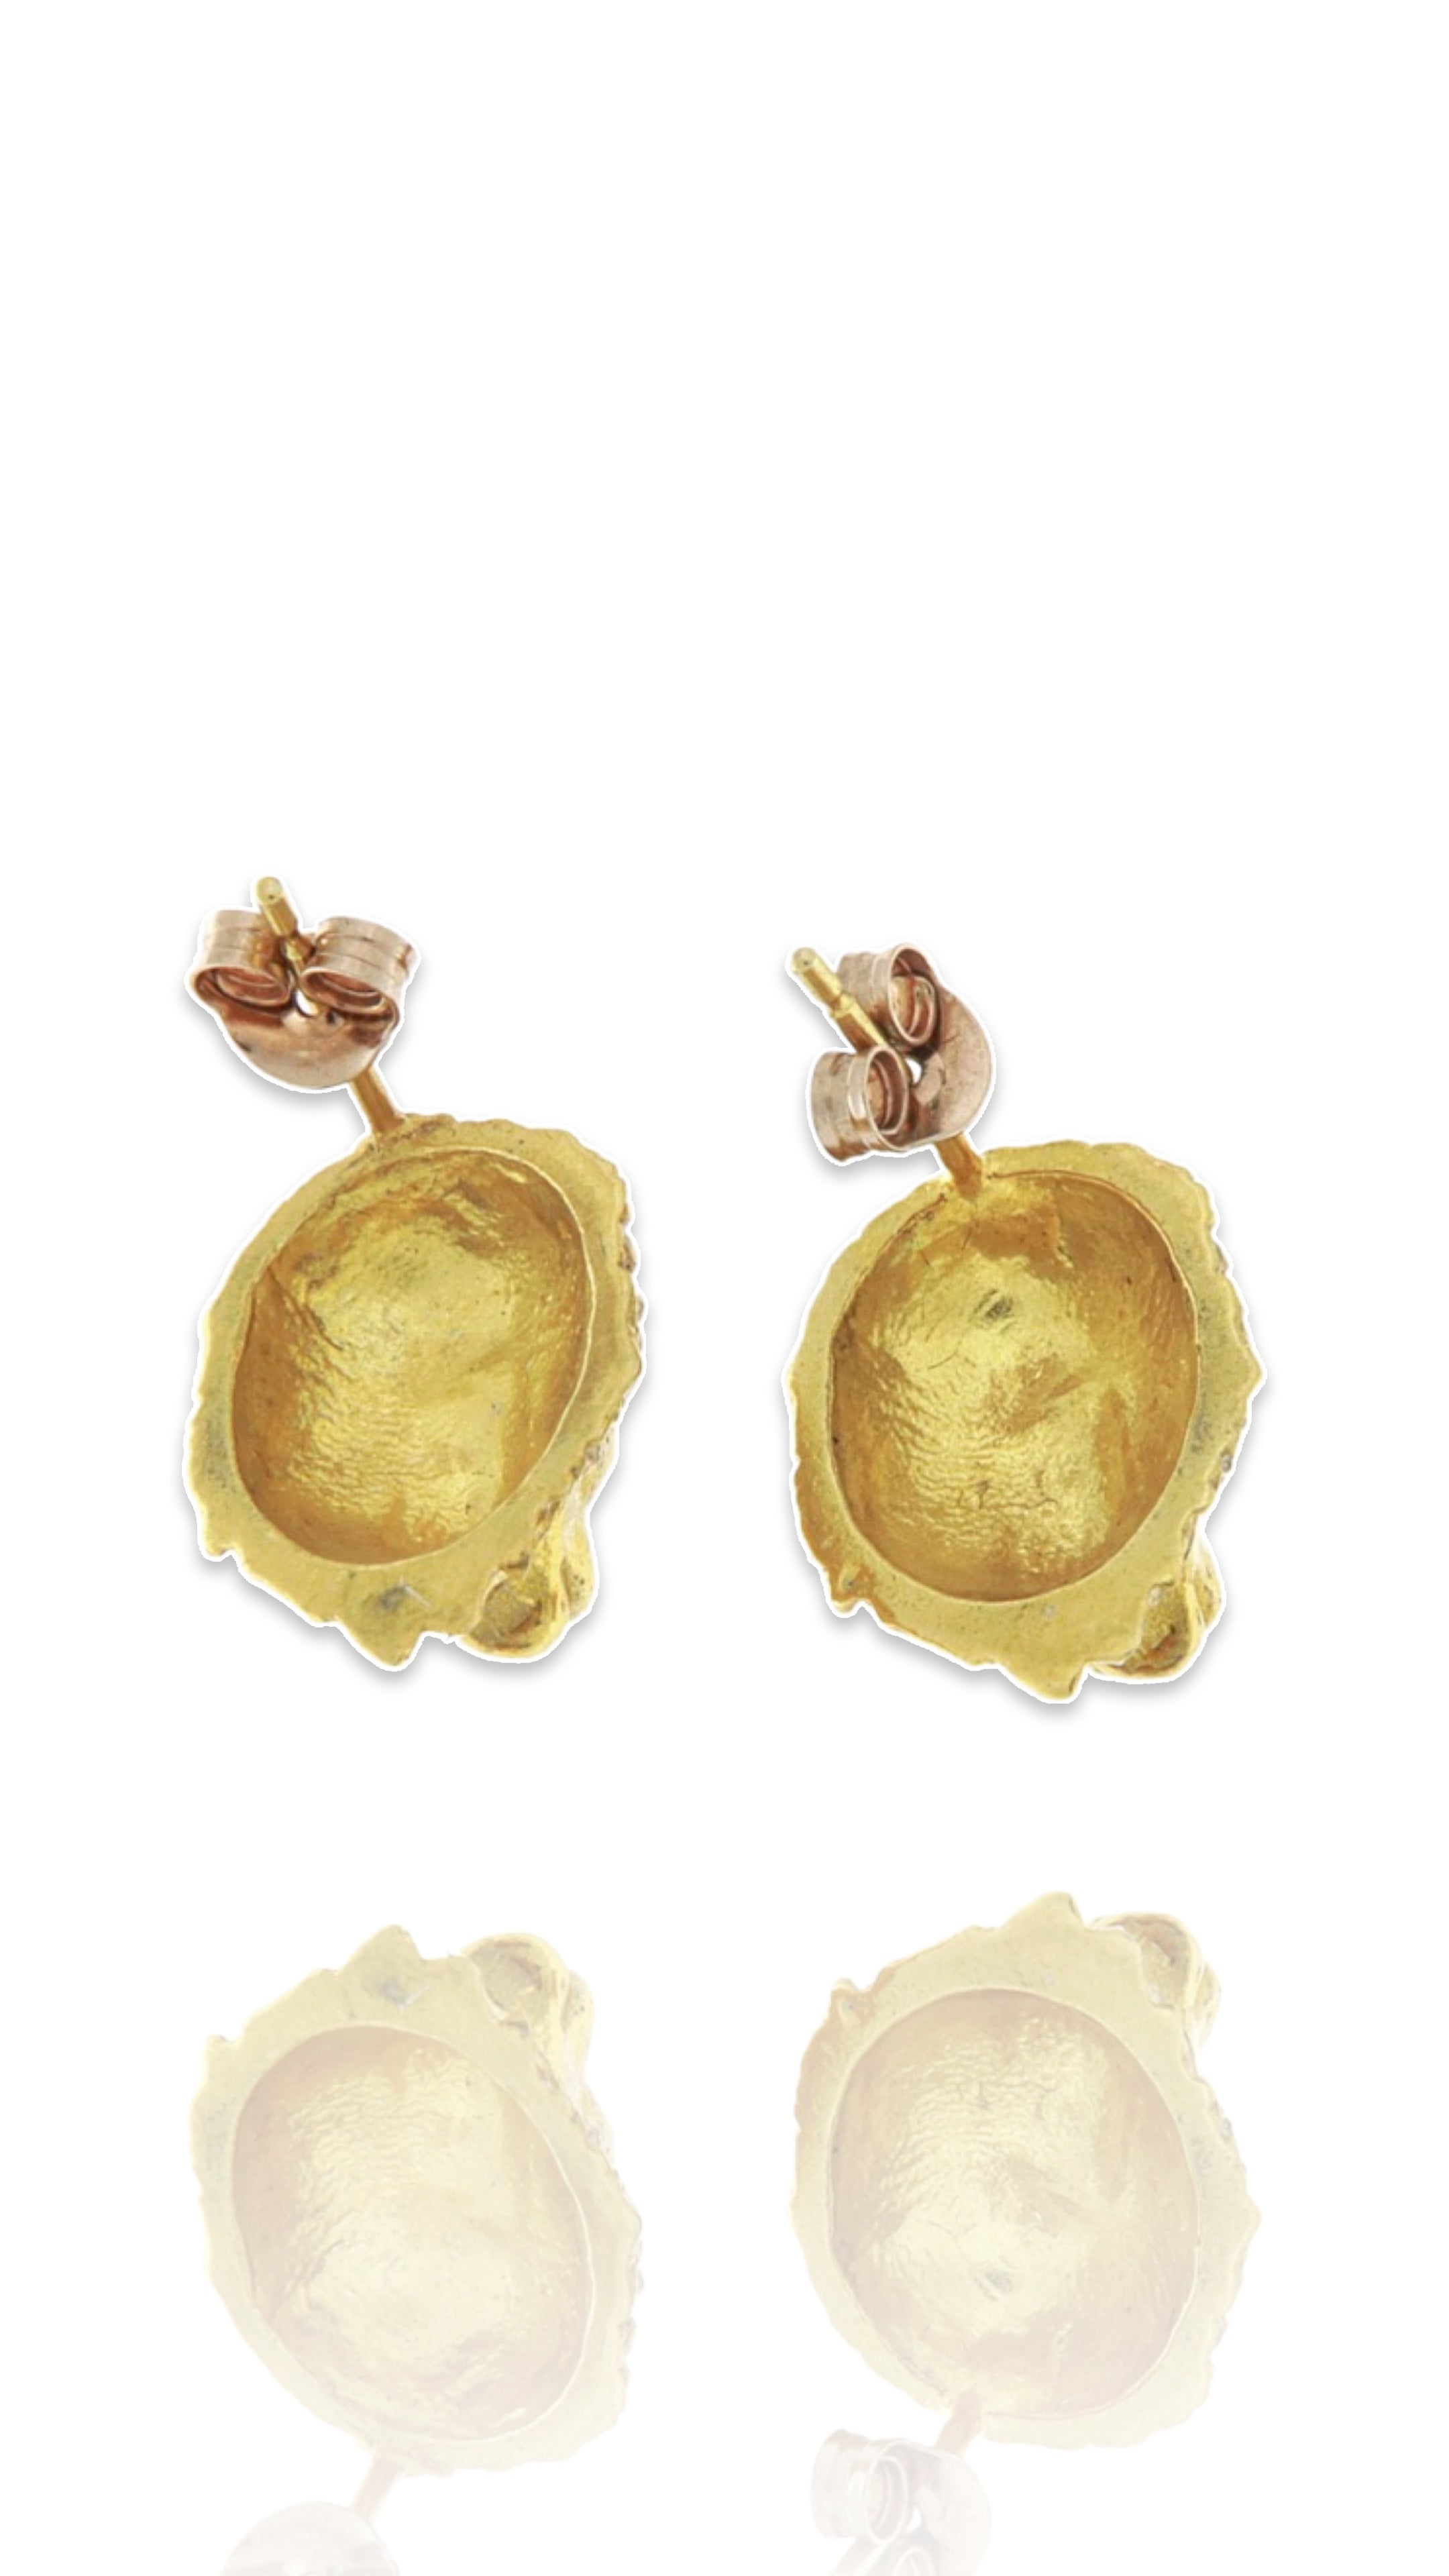 18ct gold lion earrings